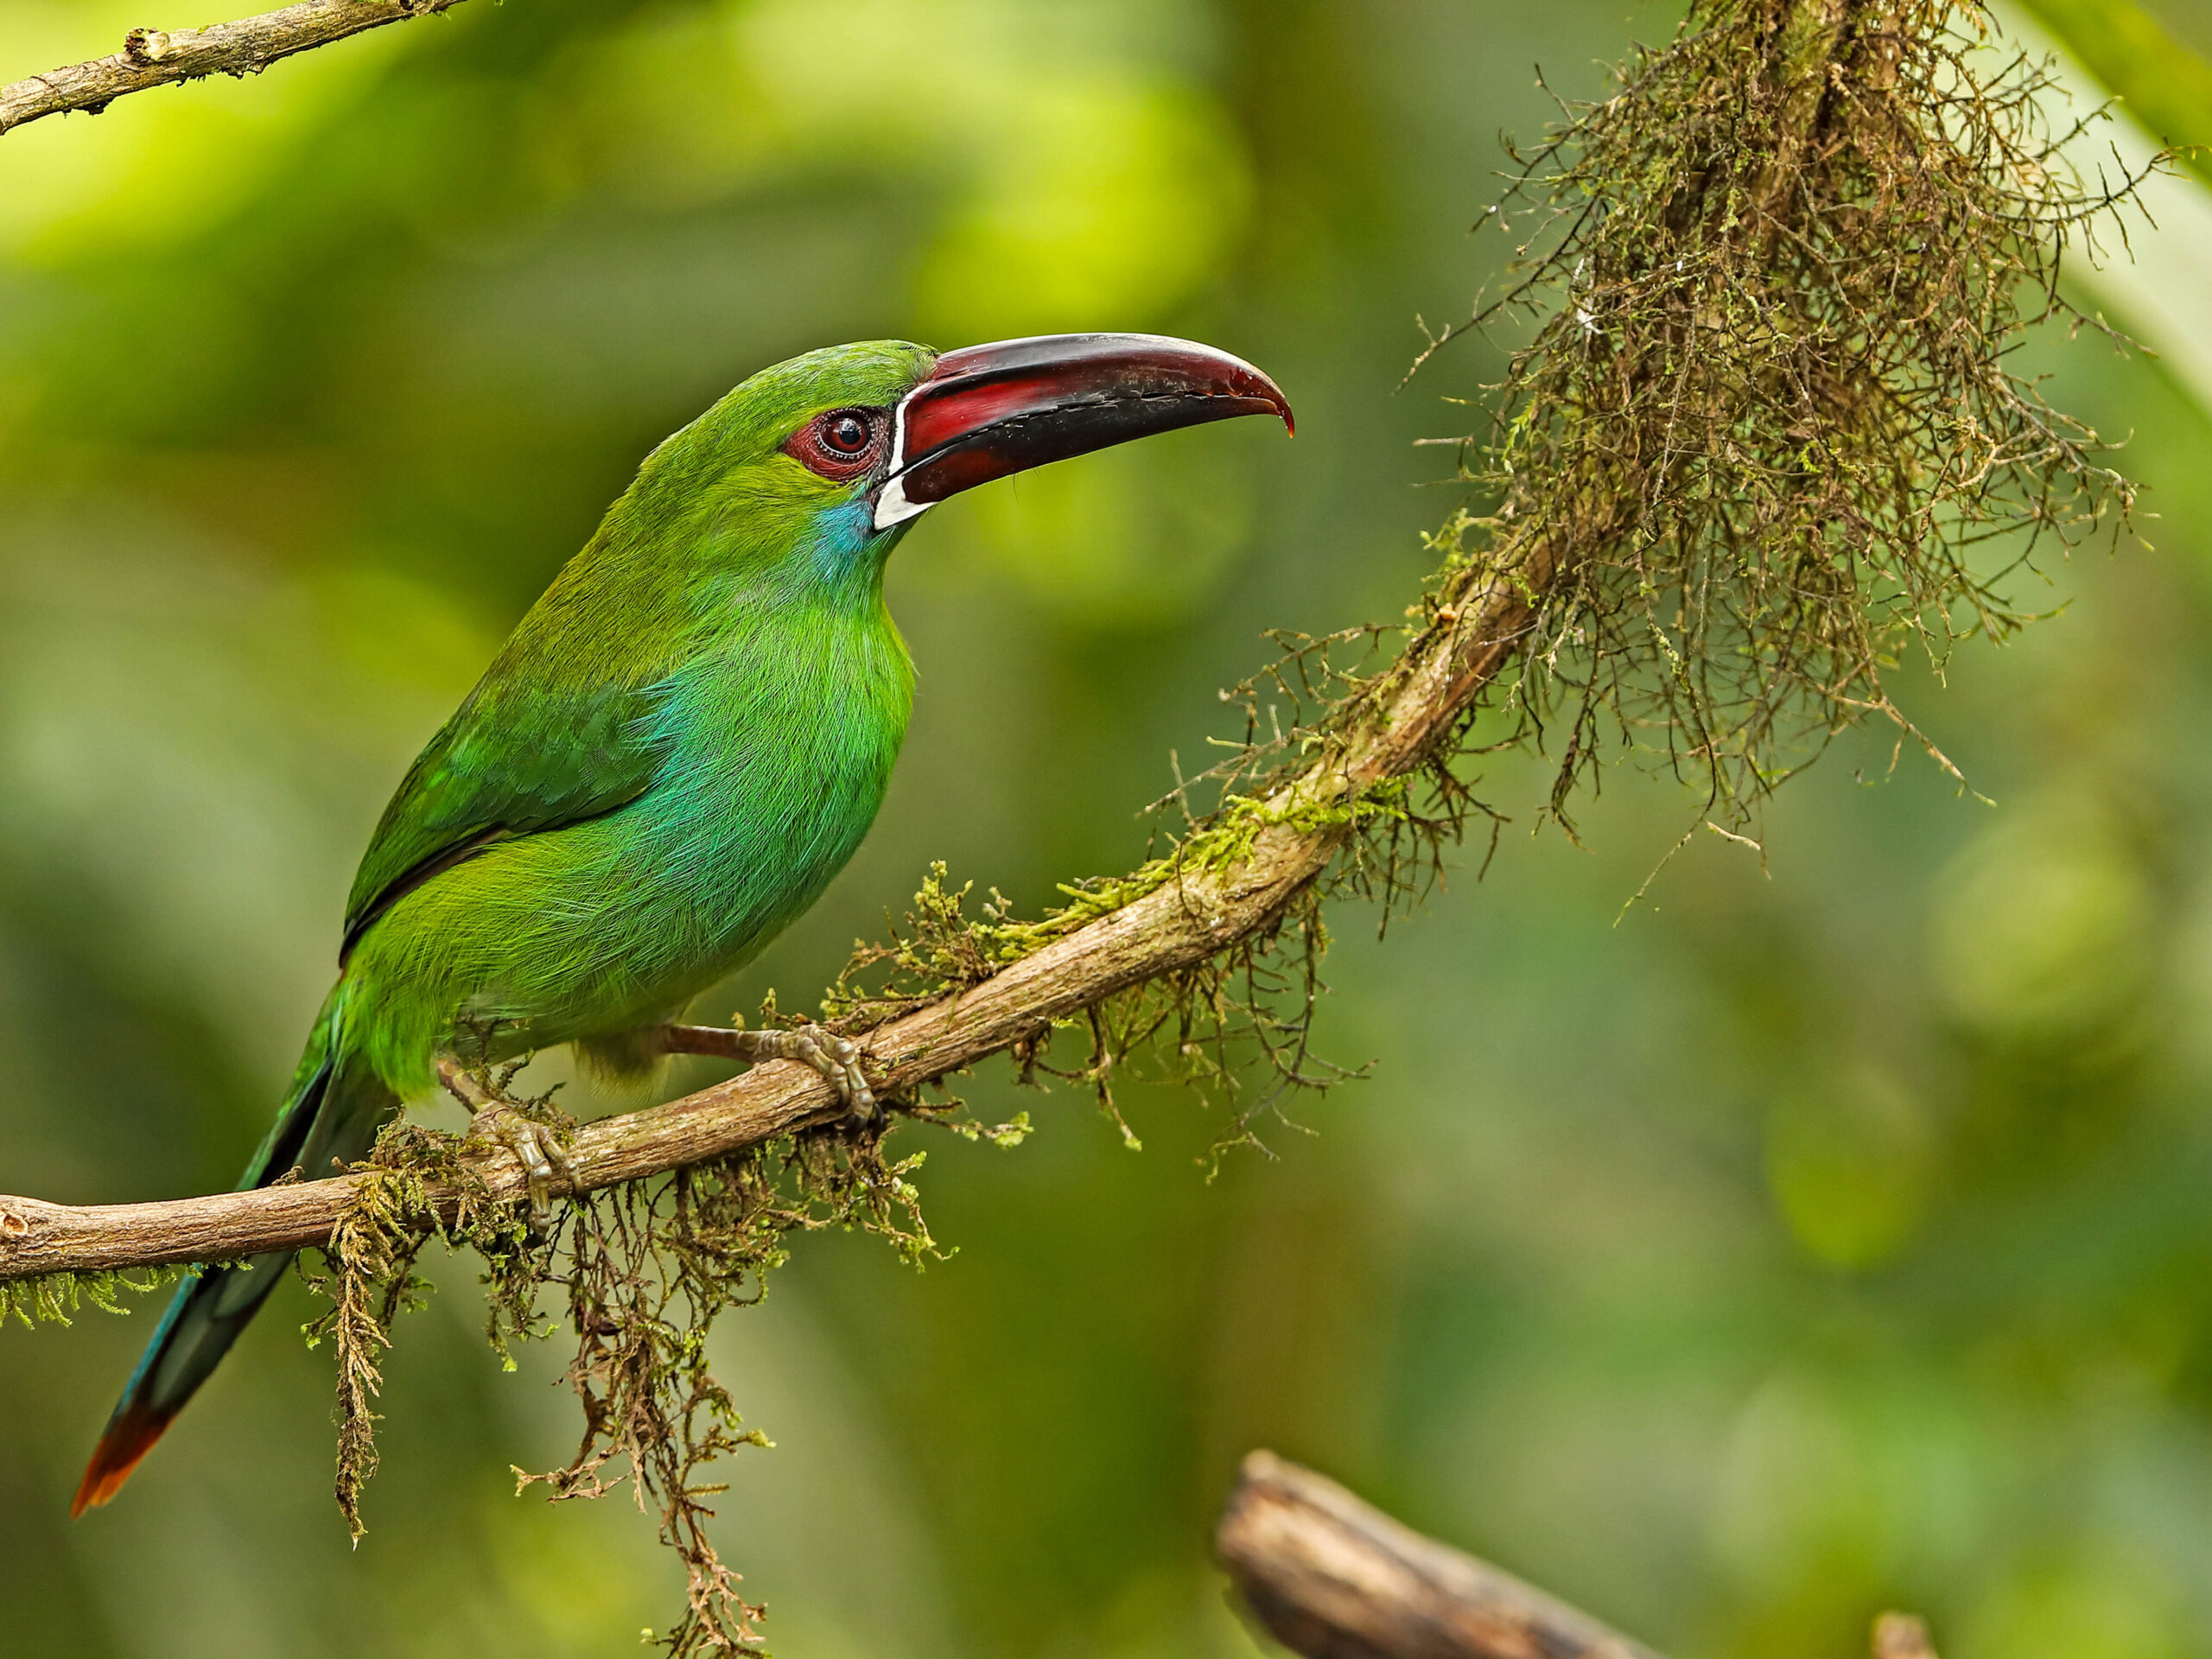 Crimson-rumped toucanet in Ecuador